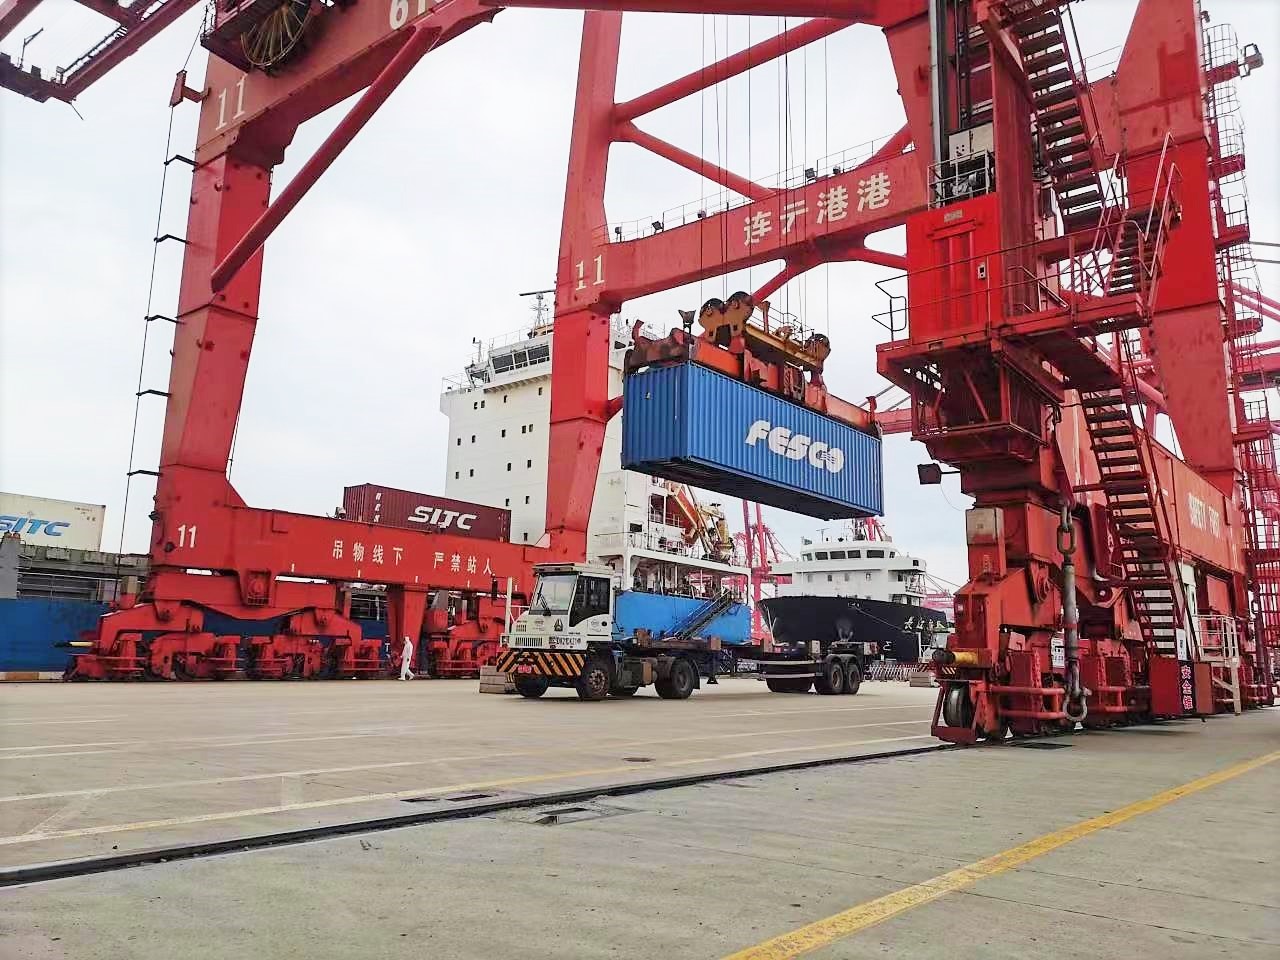 FESCO organizes an intermodal service from Japan to Uzbekistan via China and Kazakhstan